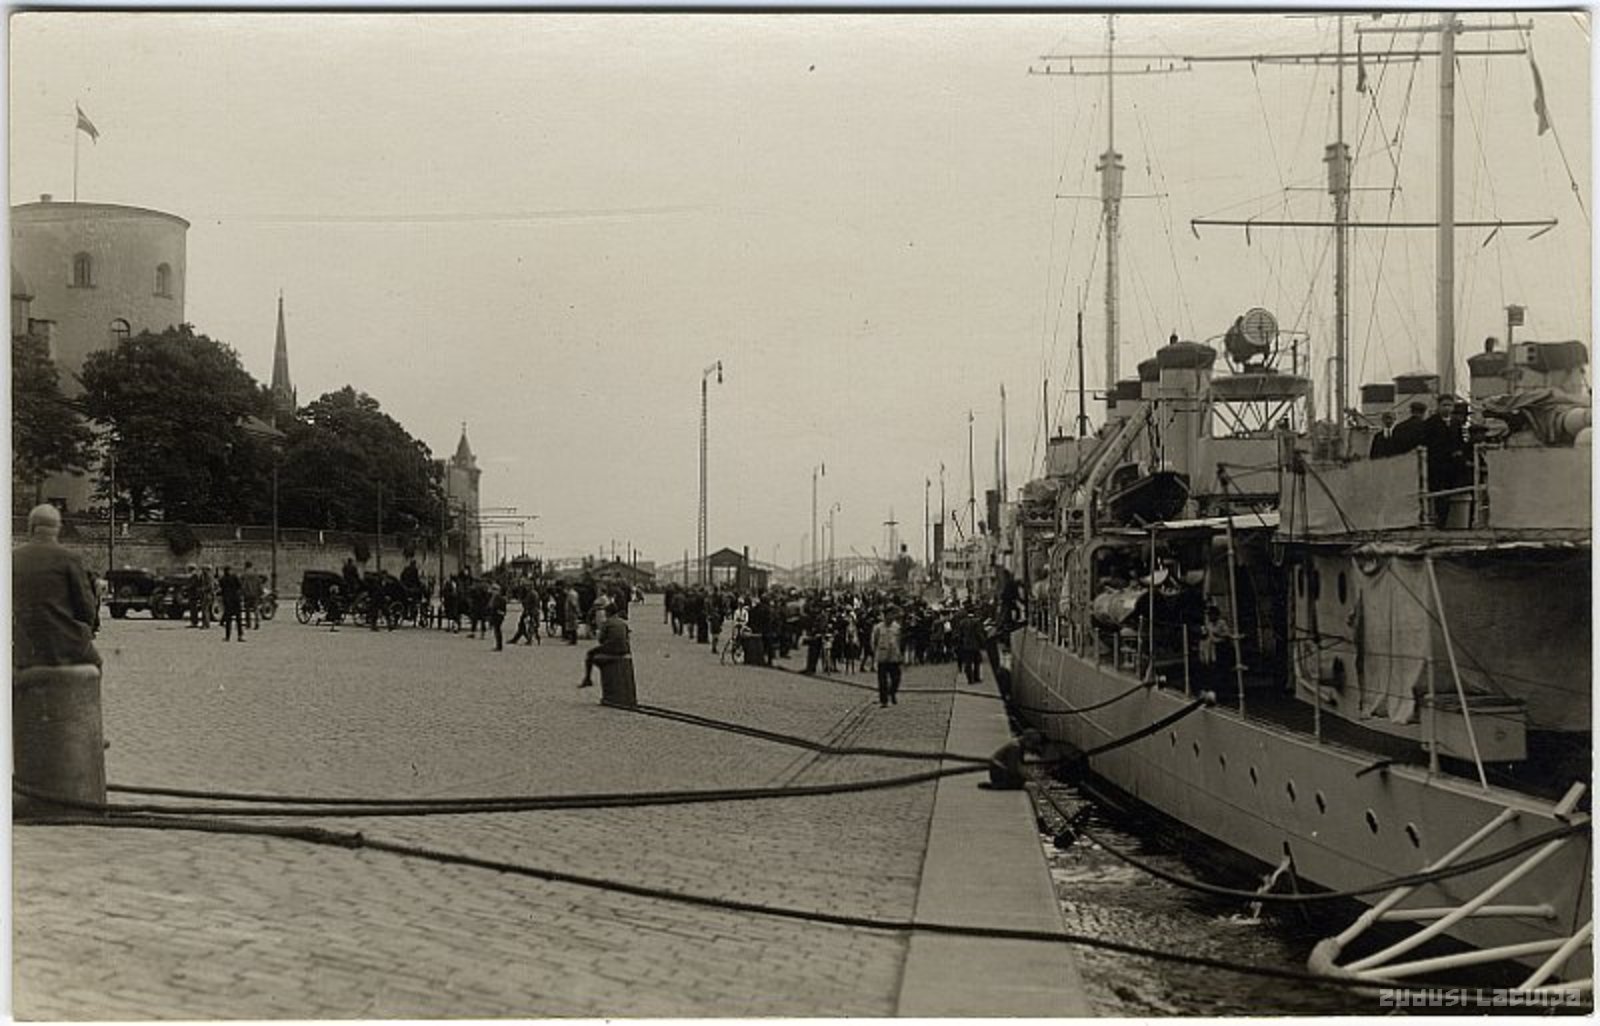 United States warships in Riga